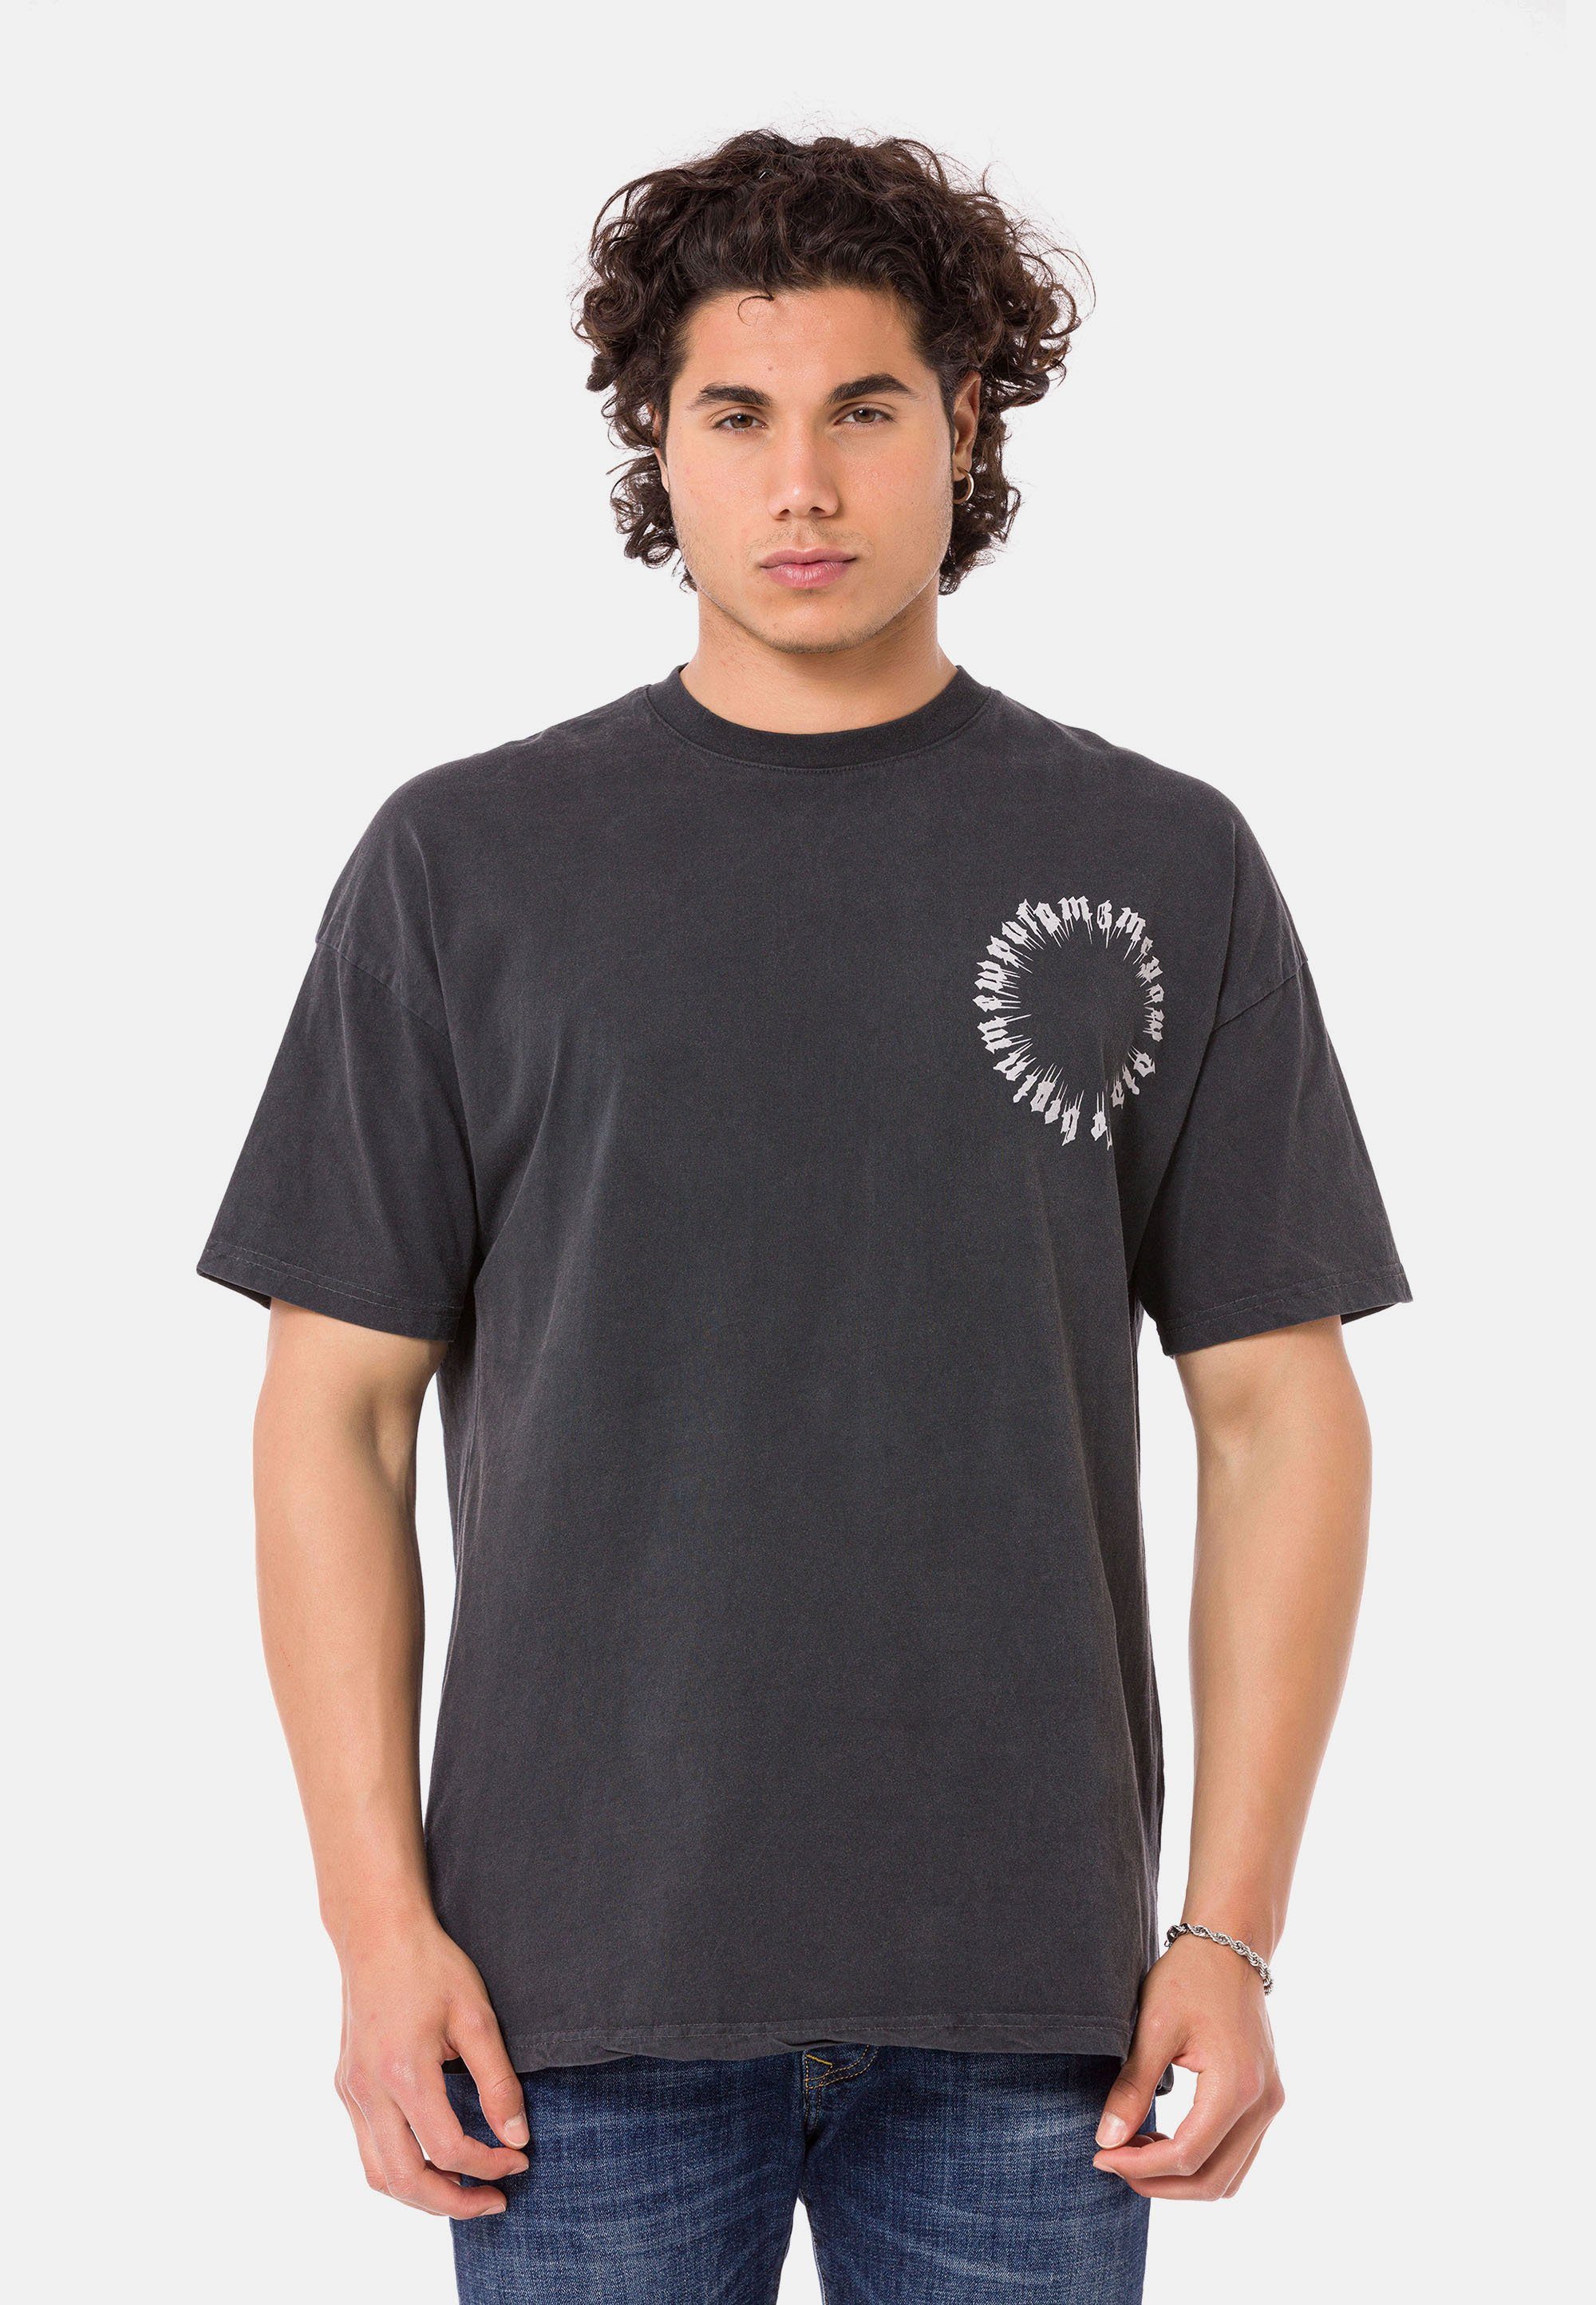 RedBridge T-Shirt Runcorn mit großflächigem Print auf dem Rücken schwarz